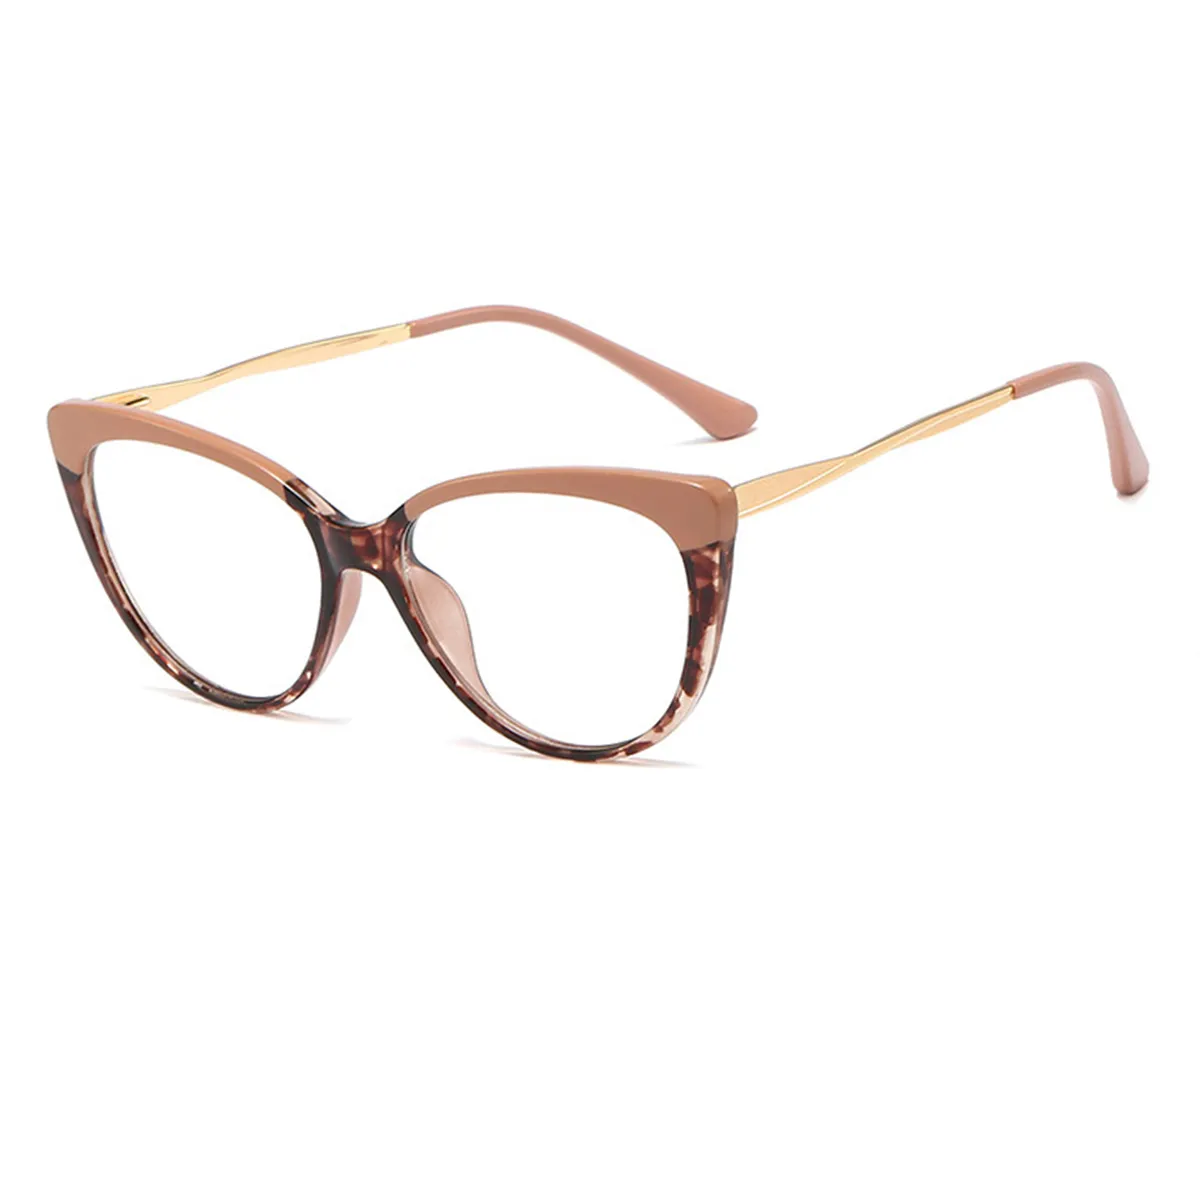 Alenie - Cat-eye Brown Glasses for Women